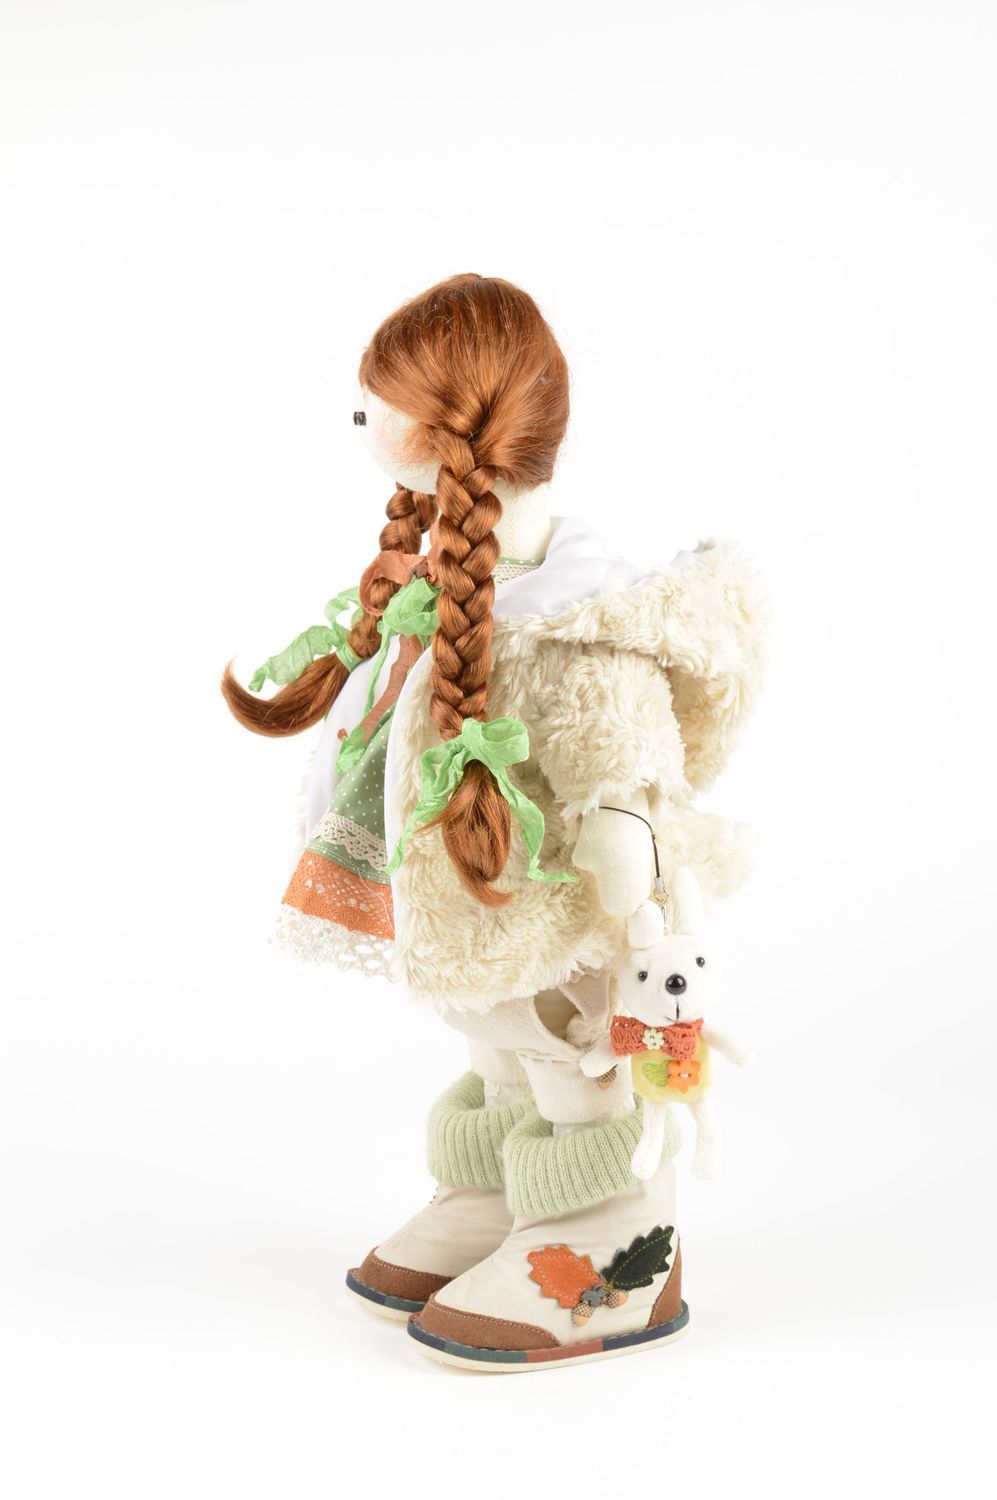 Handmade designer stylish doll unusual fabric doll for girls textile doll photo 3